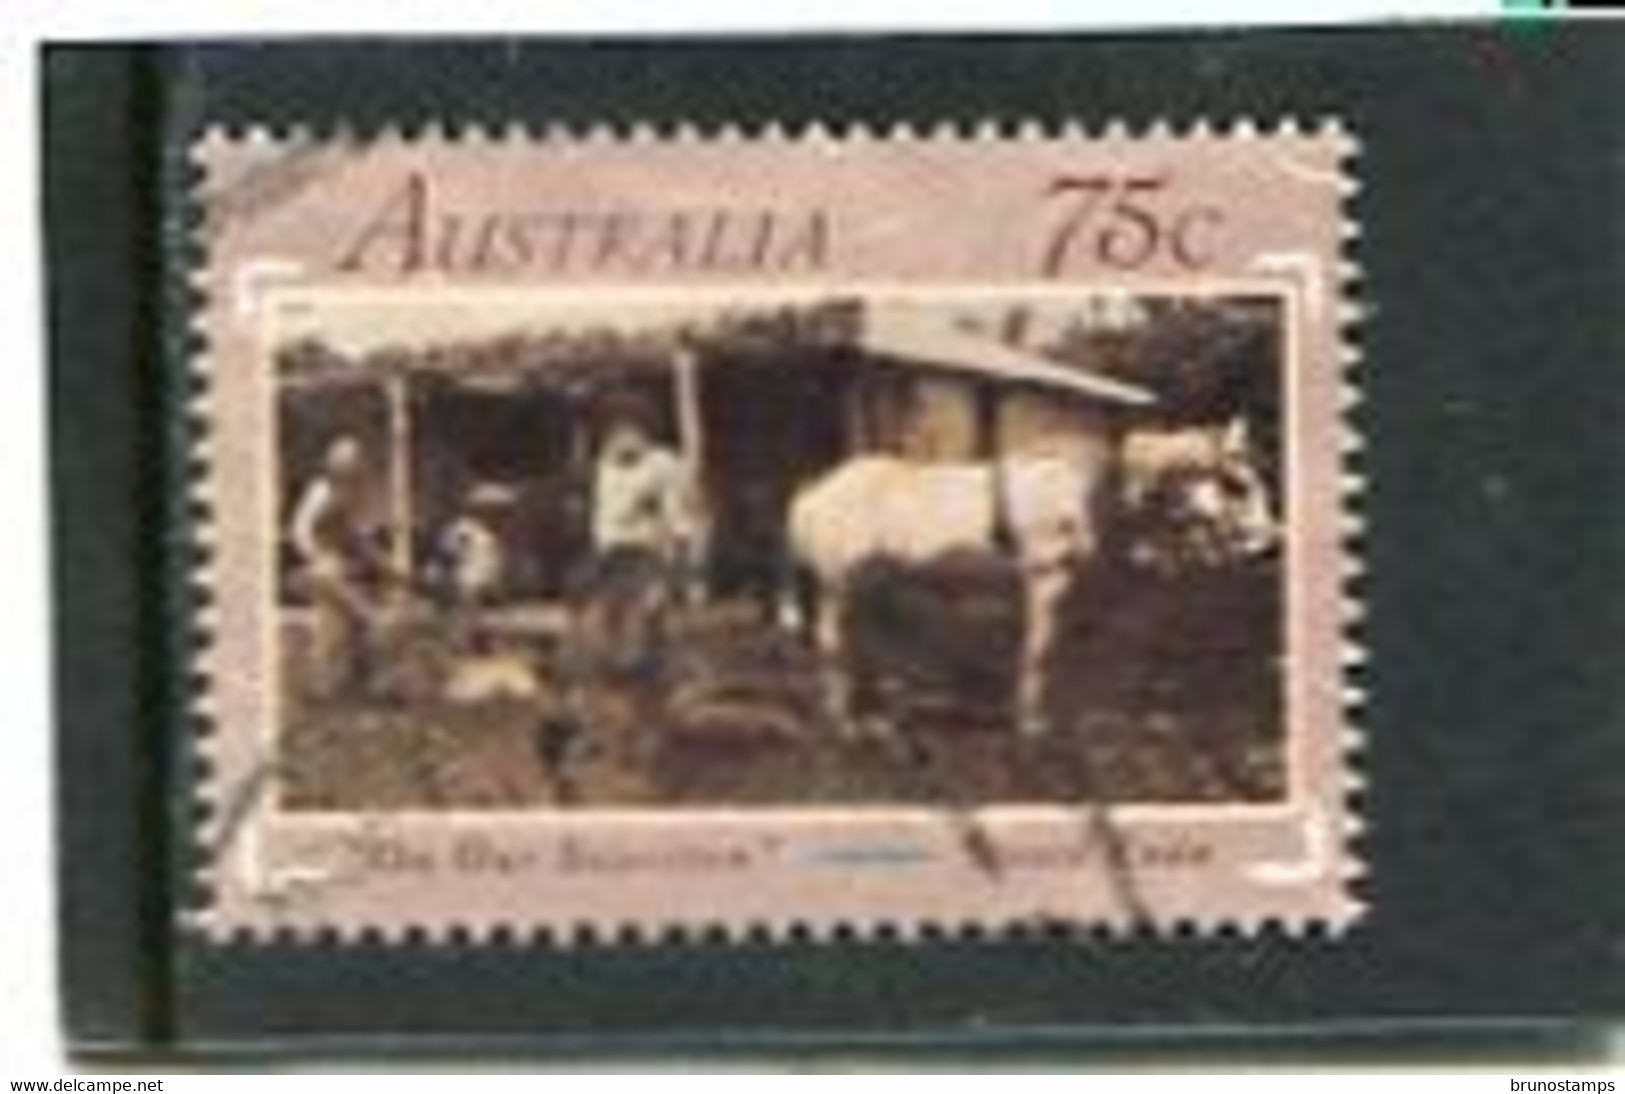 AUSTRALIA - 1991  75c  AUSTRALIAN WRITERS  FINE USED - Gebruikt